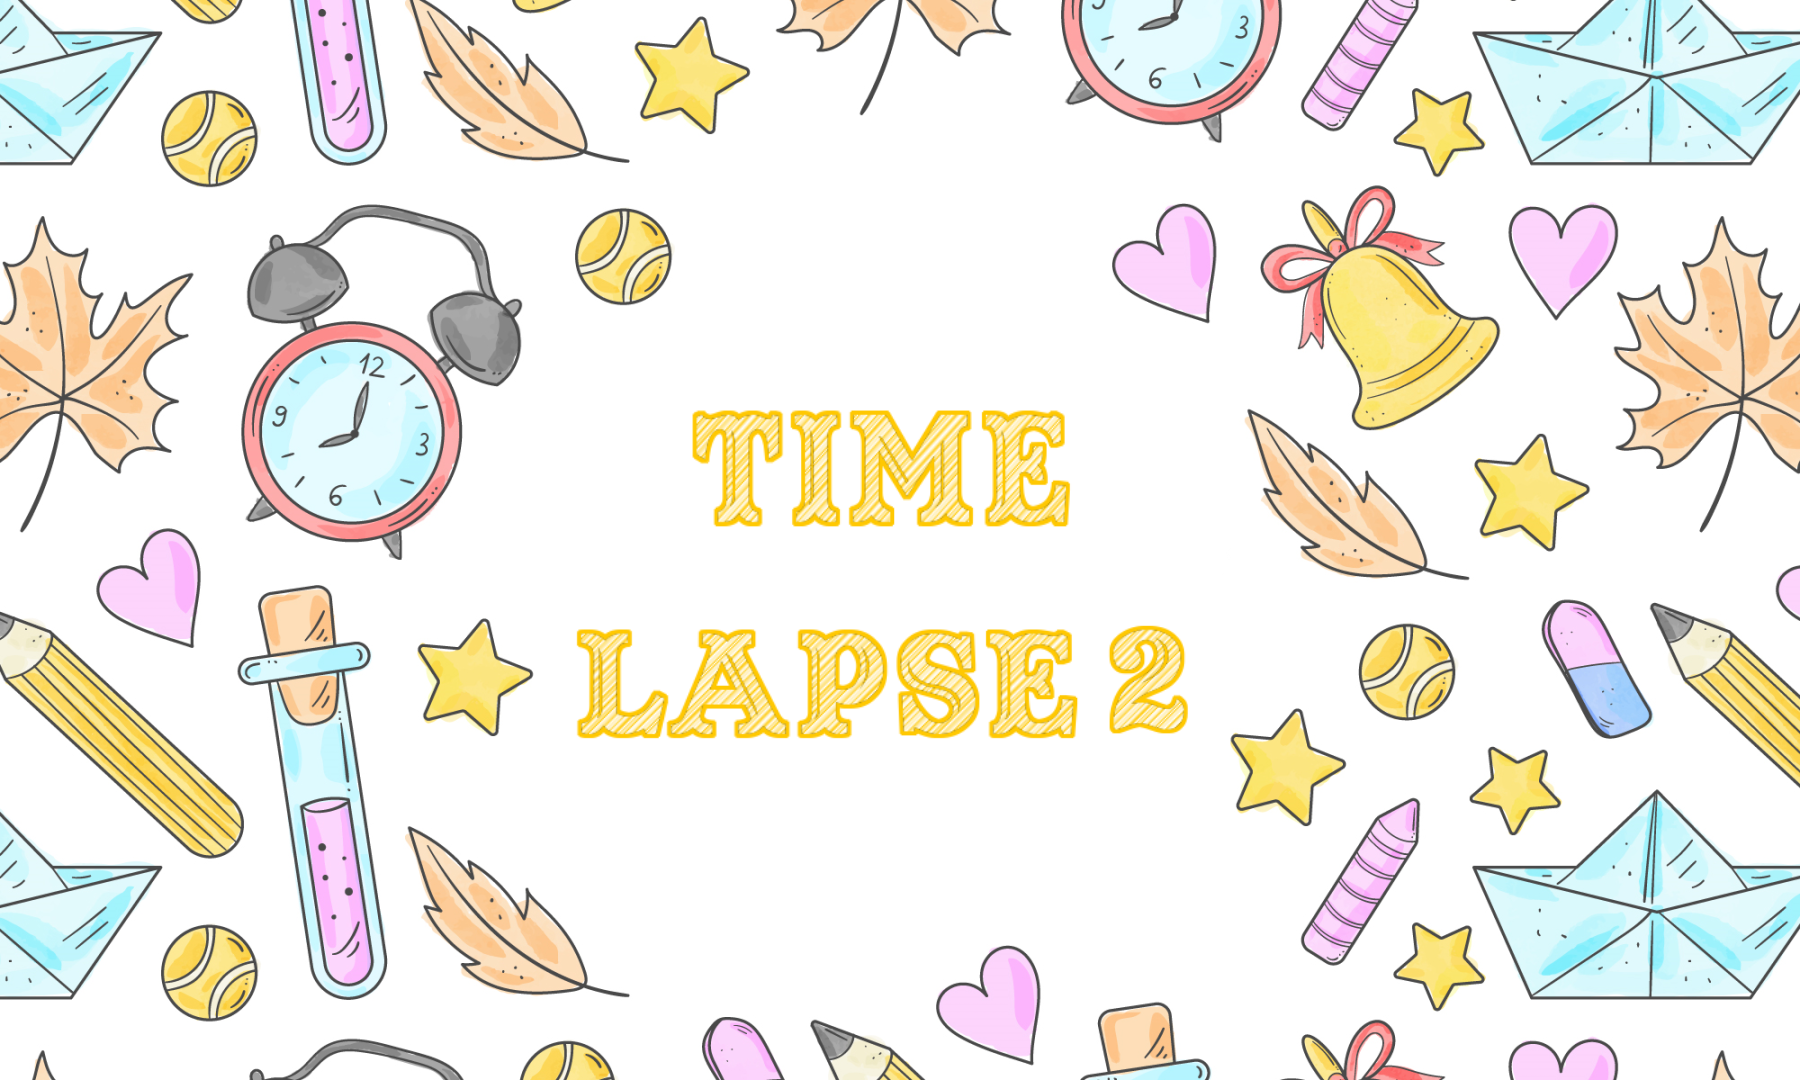 TimeLapse2